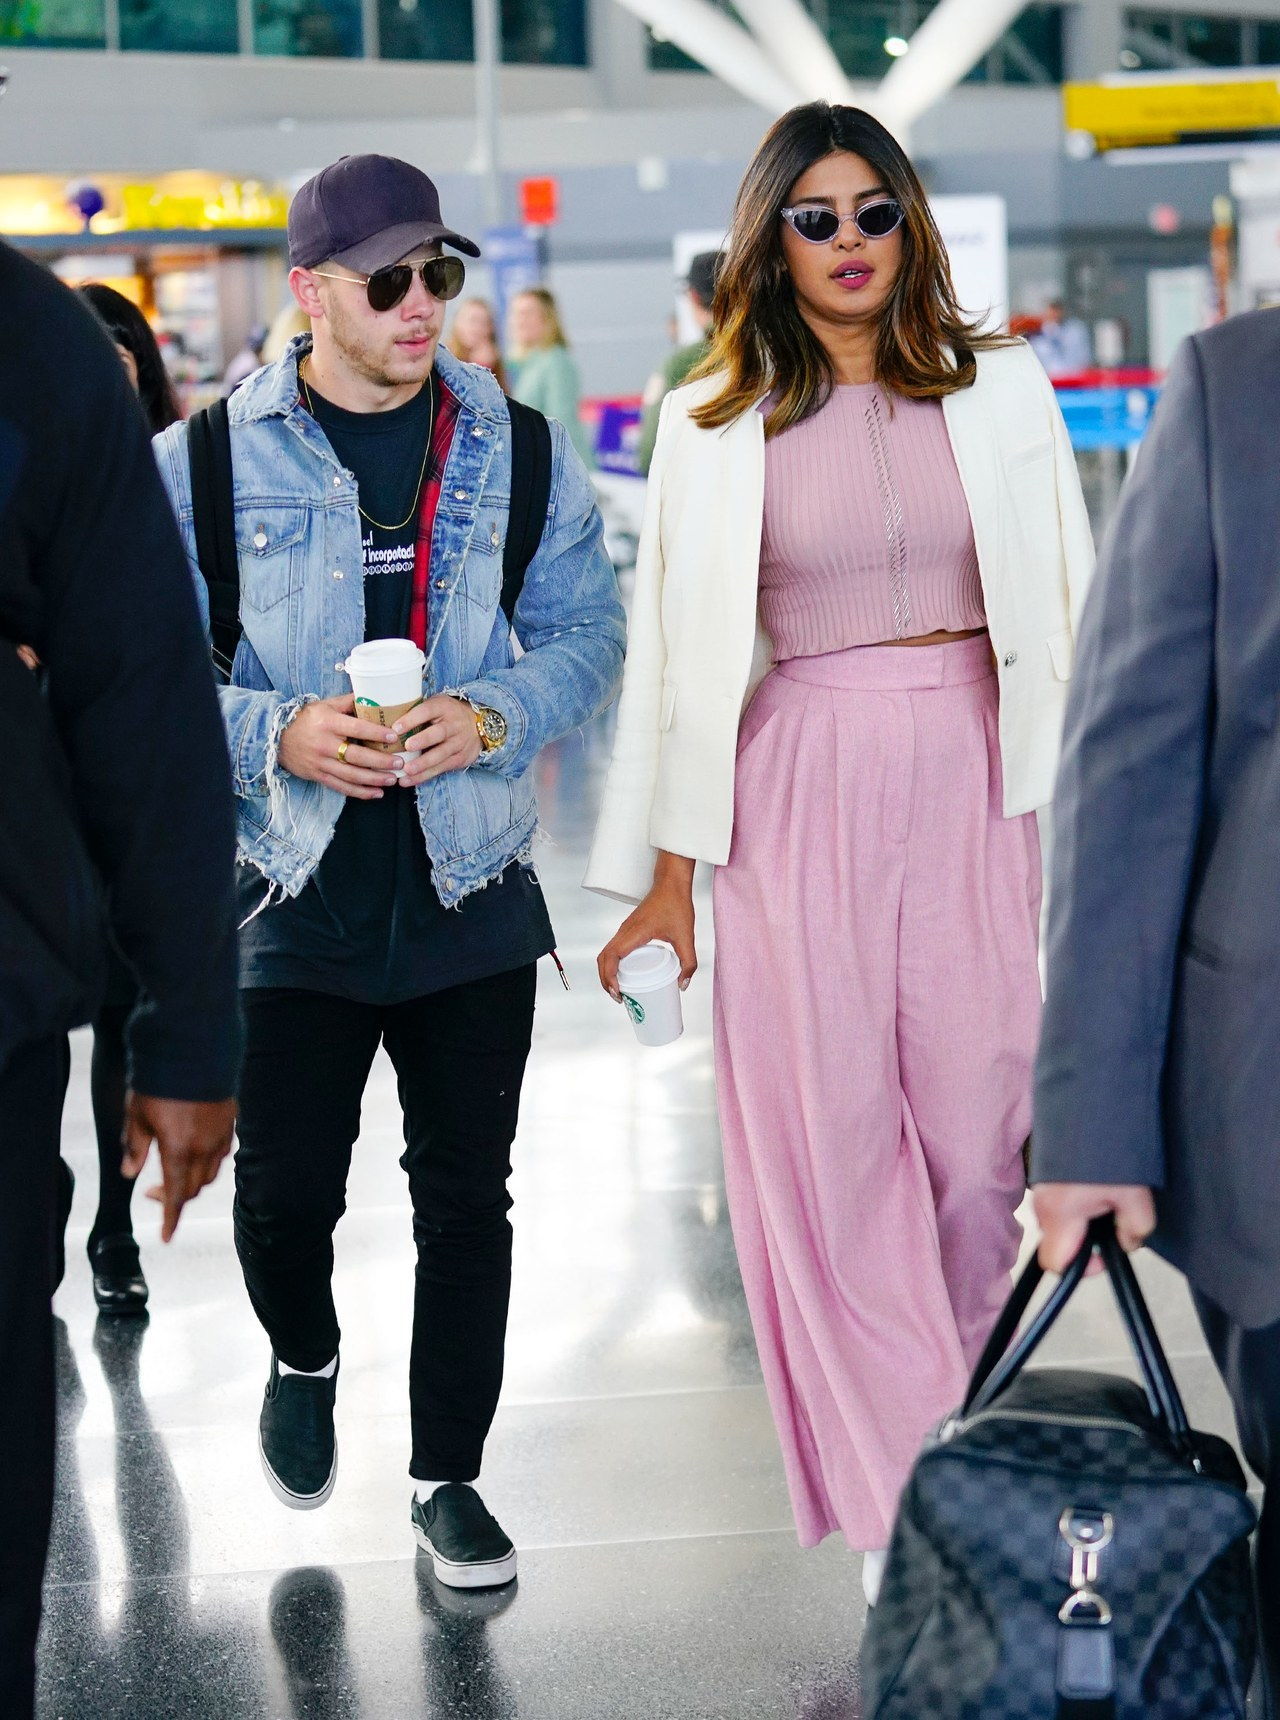 Nick Jonas and Priyanka Chopra arrive at JFK Airport together in New York